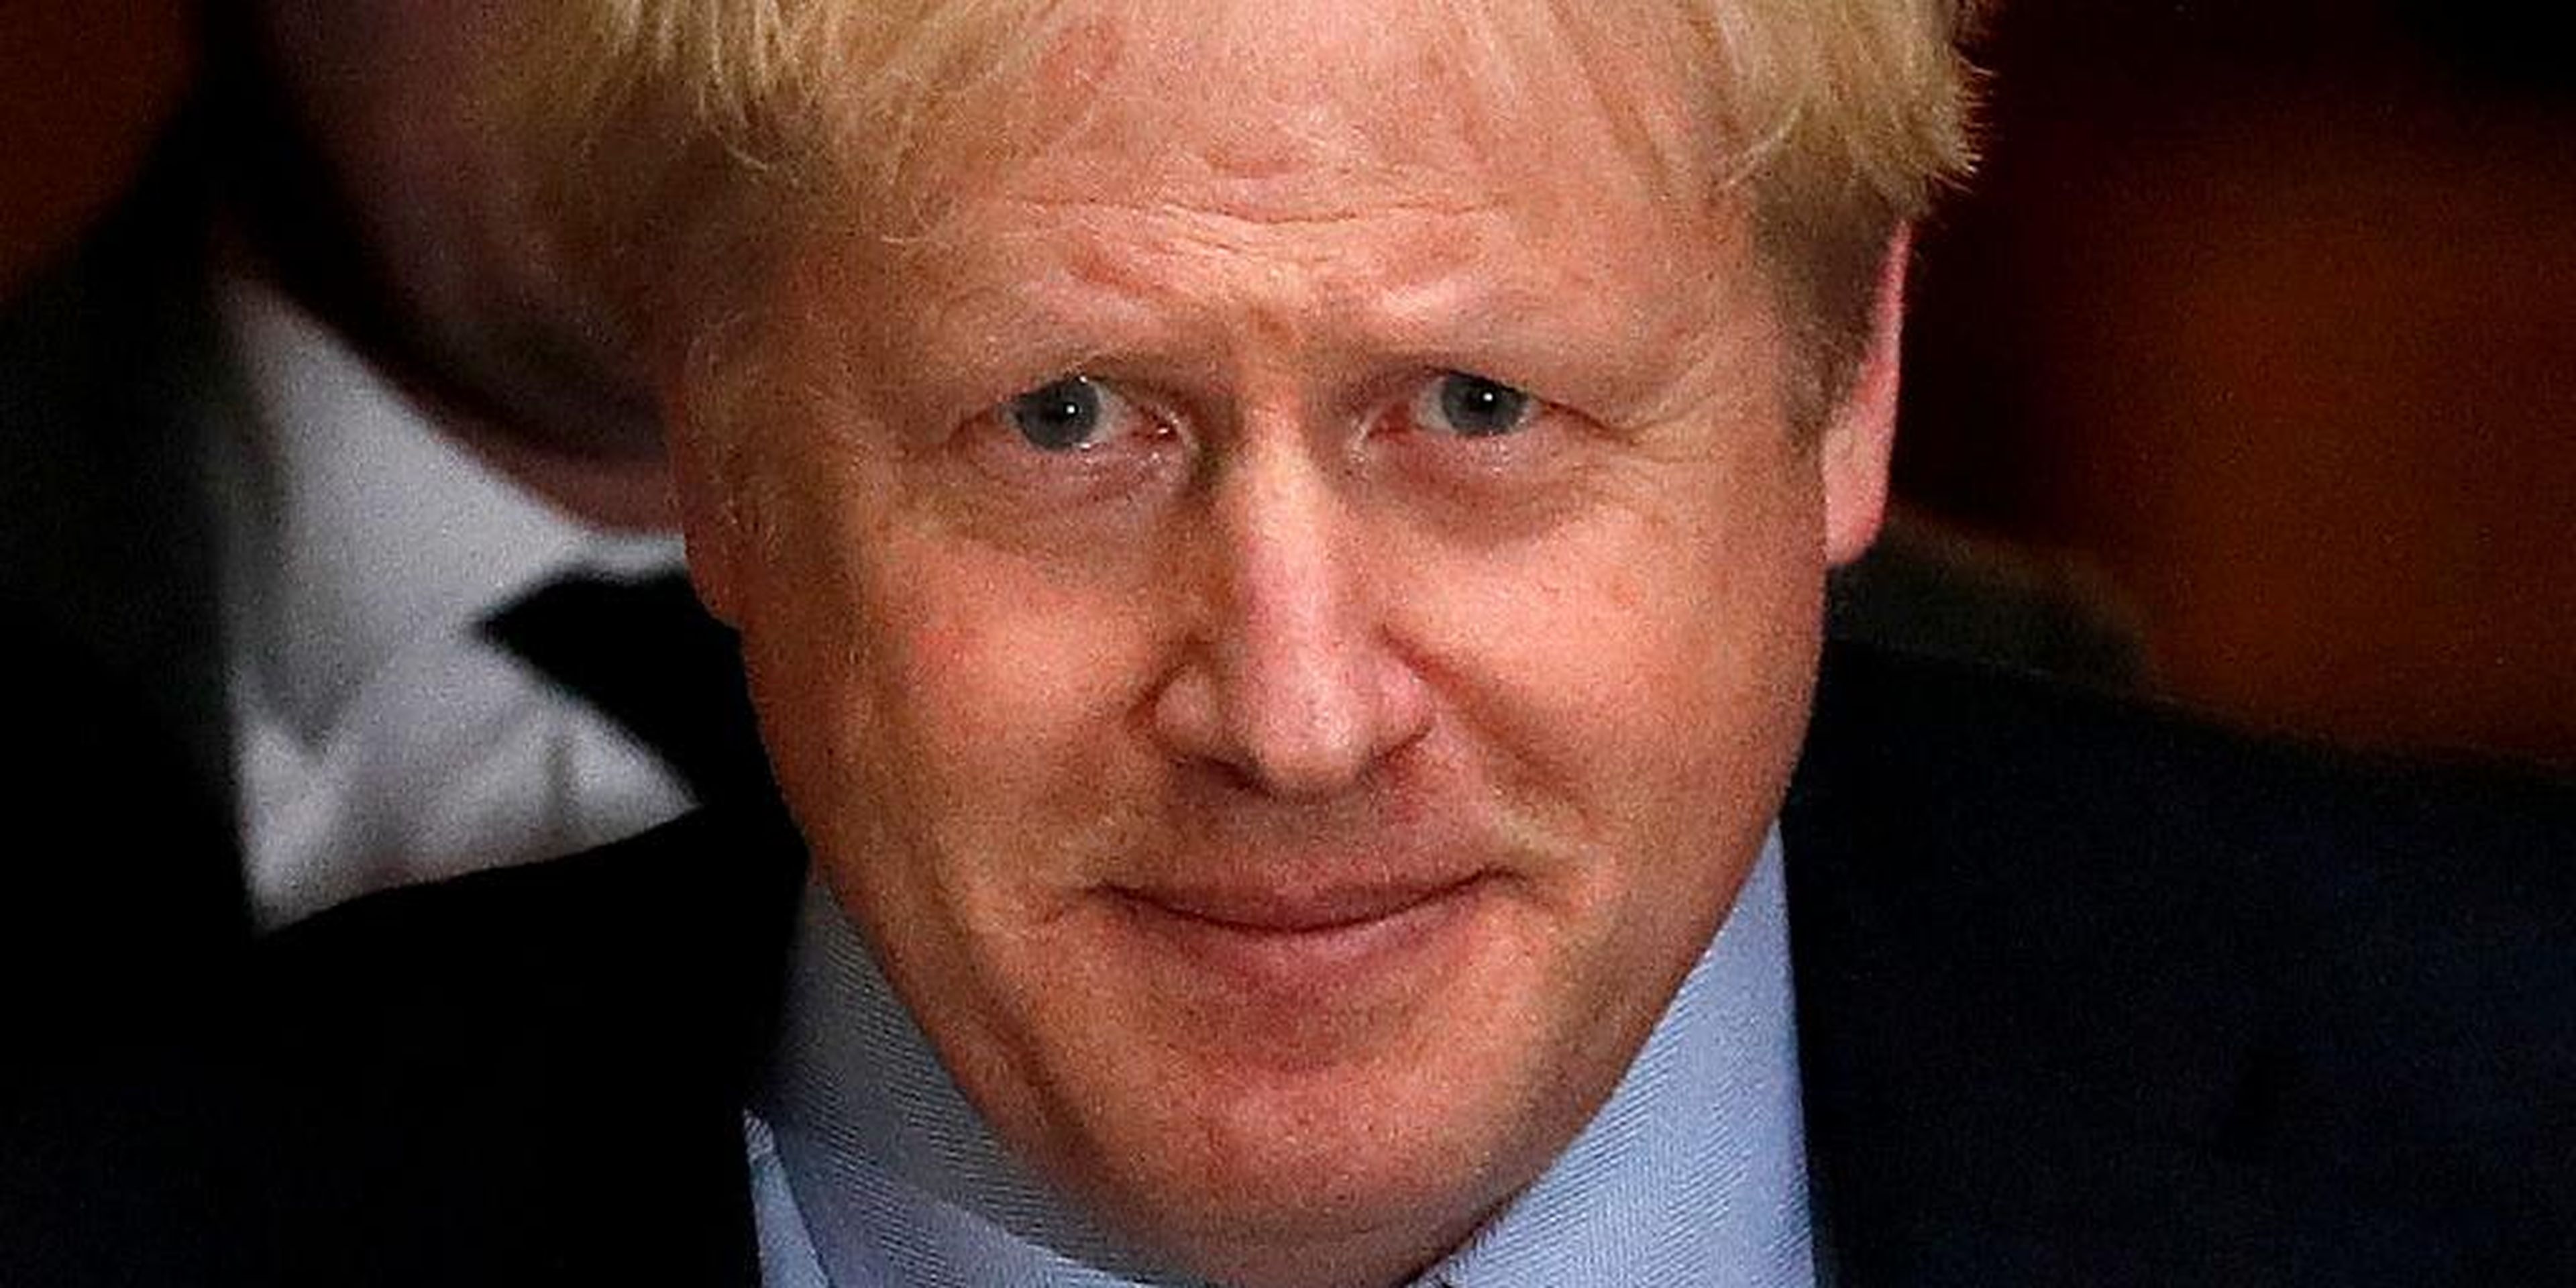 Boris Johnson's snap election bid could backfire and make Jeremy Corbyn prime minister